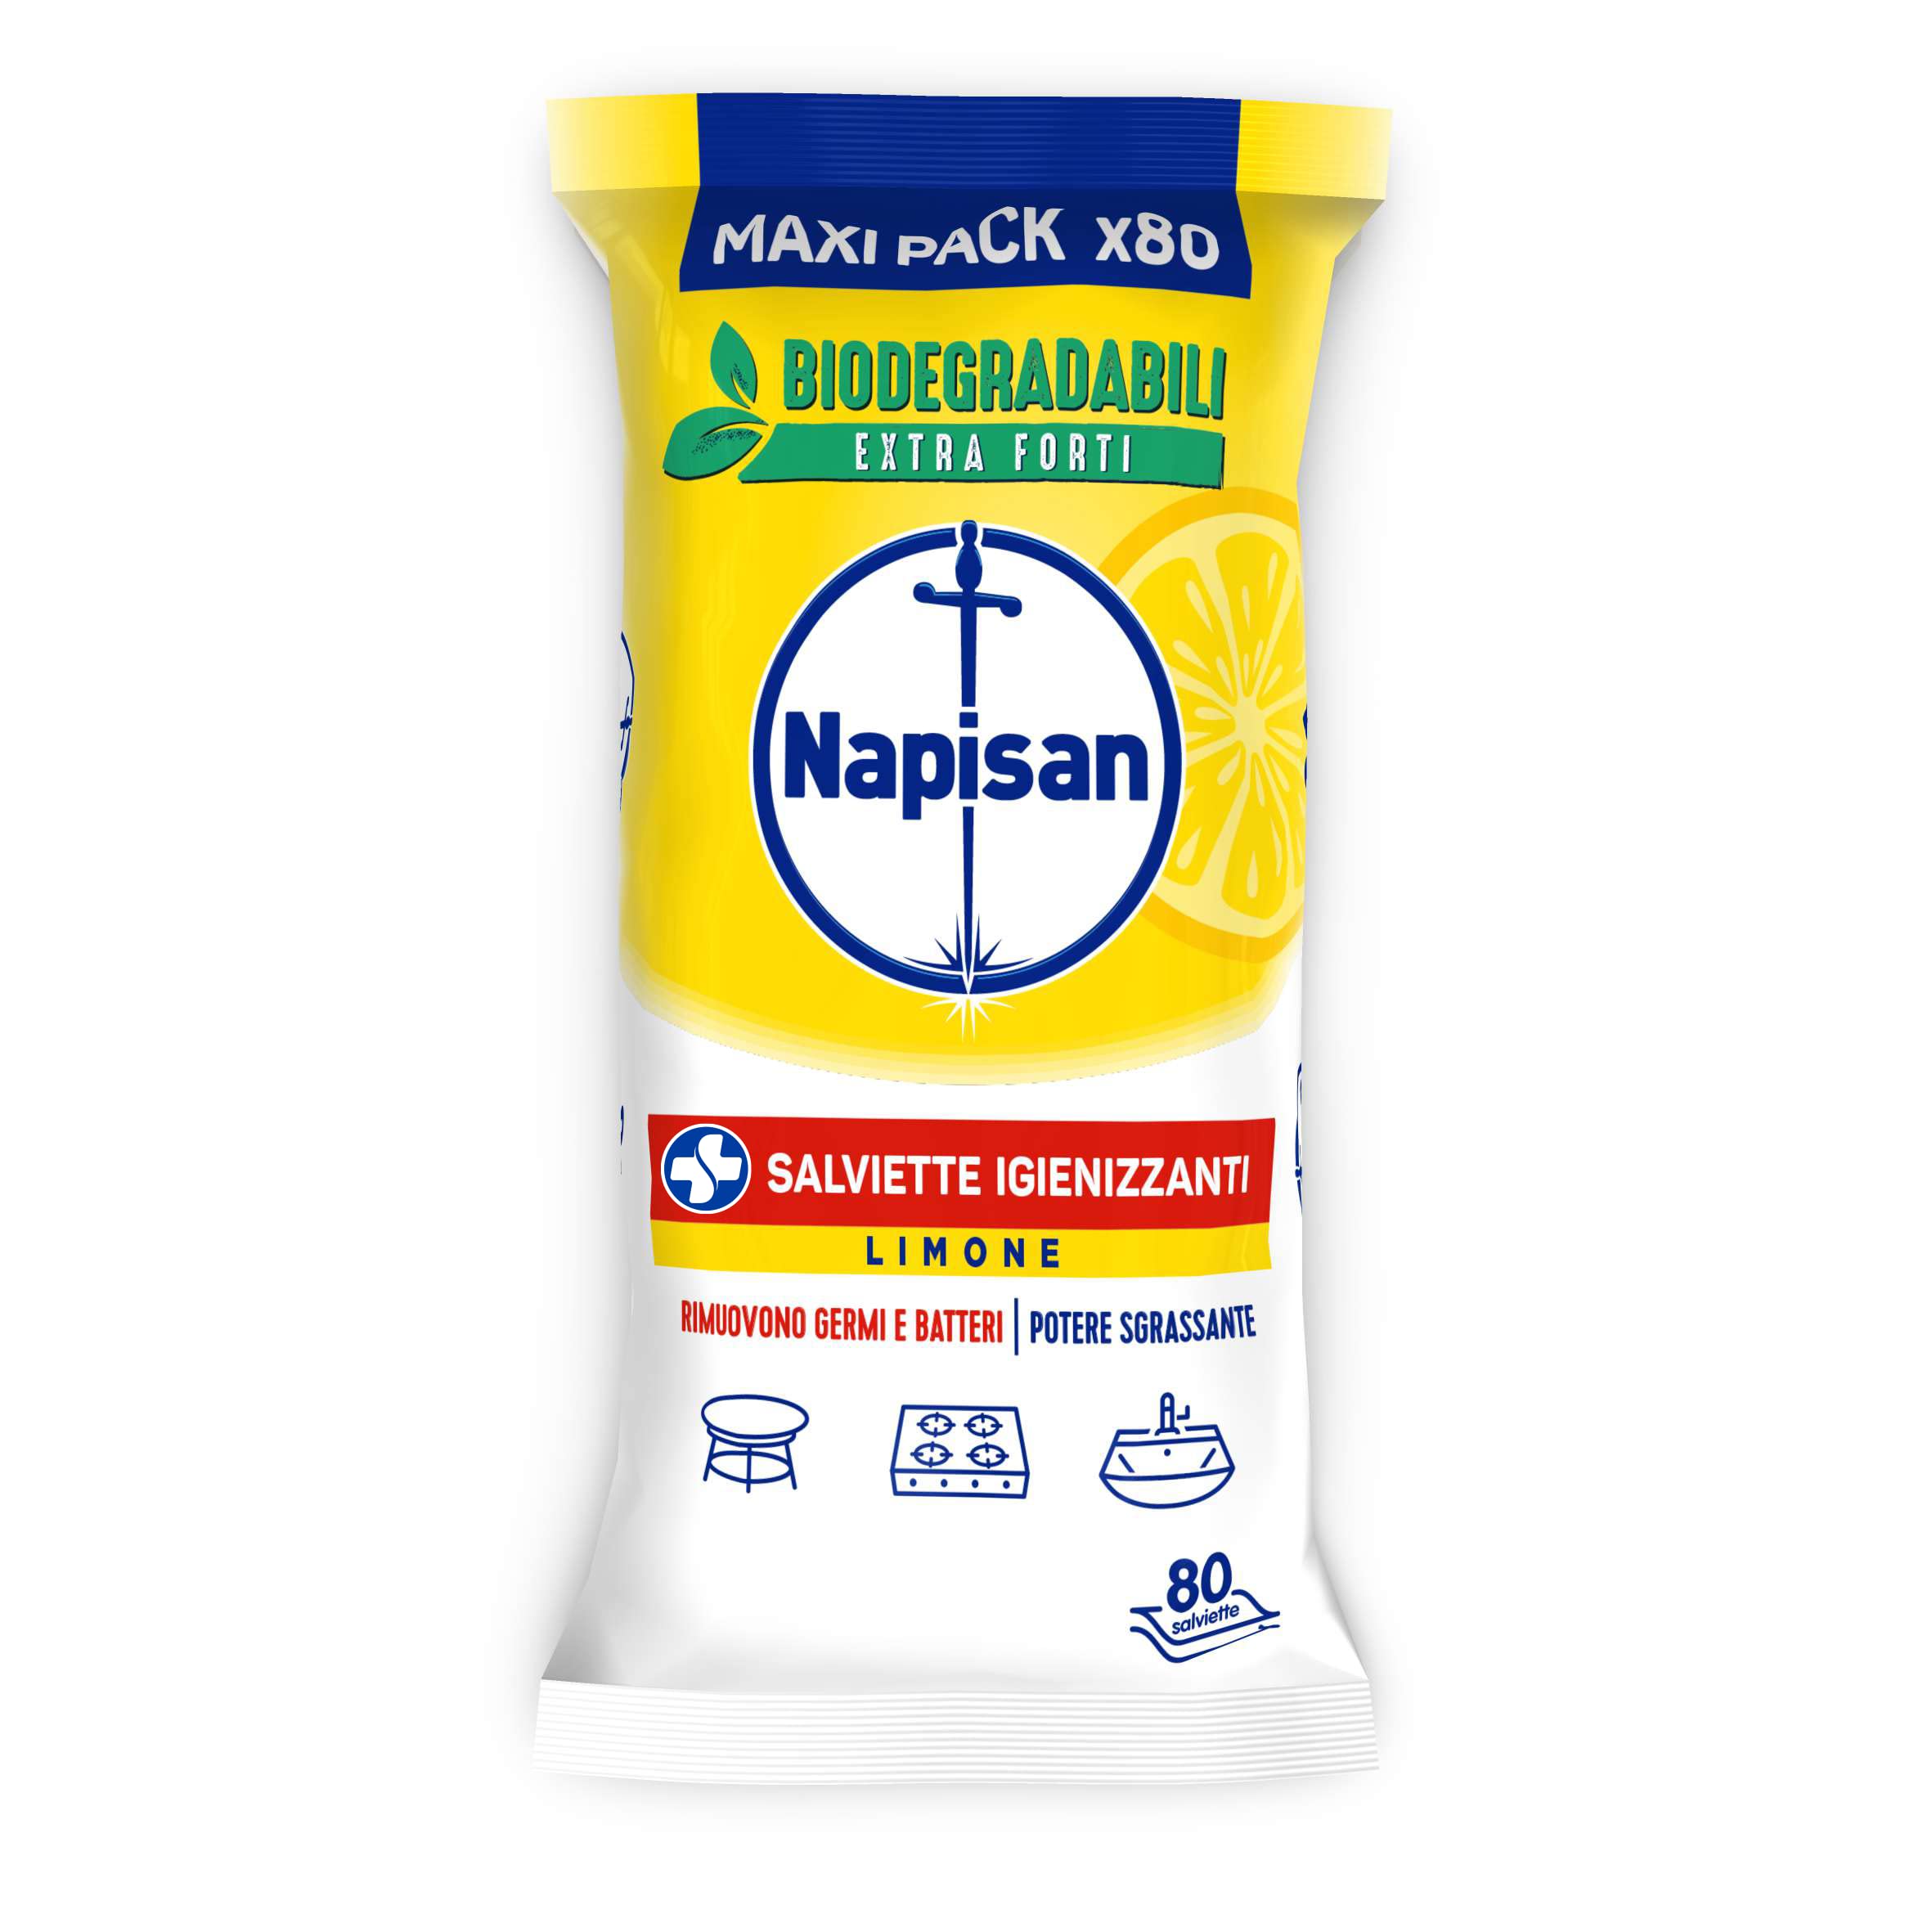 Salviette igienizzanti bio al limone Napisan maxi pack da 80 salviette